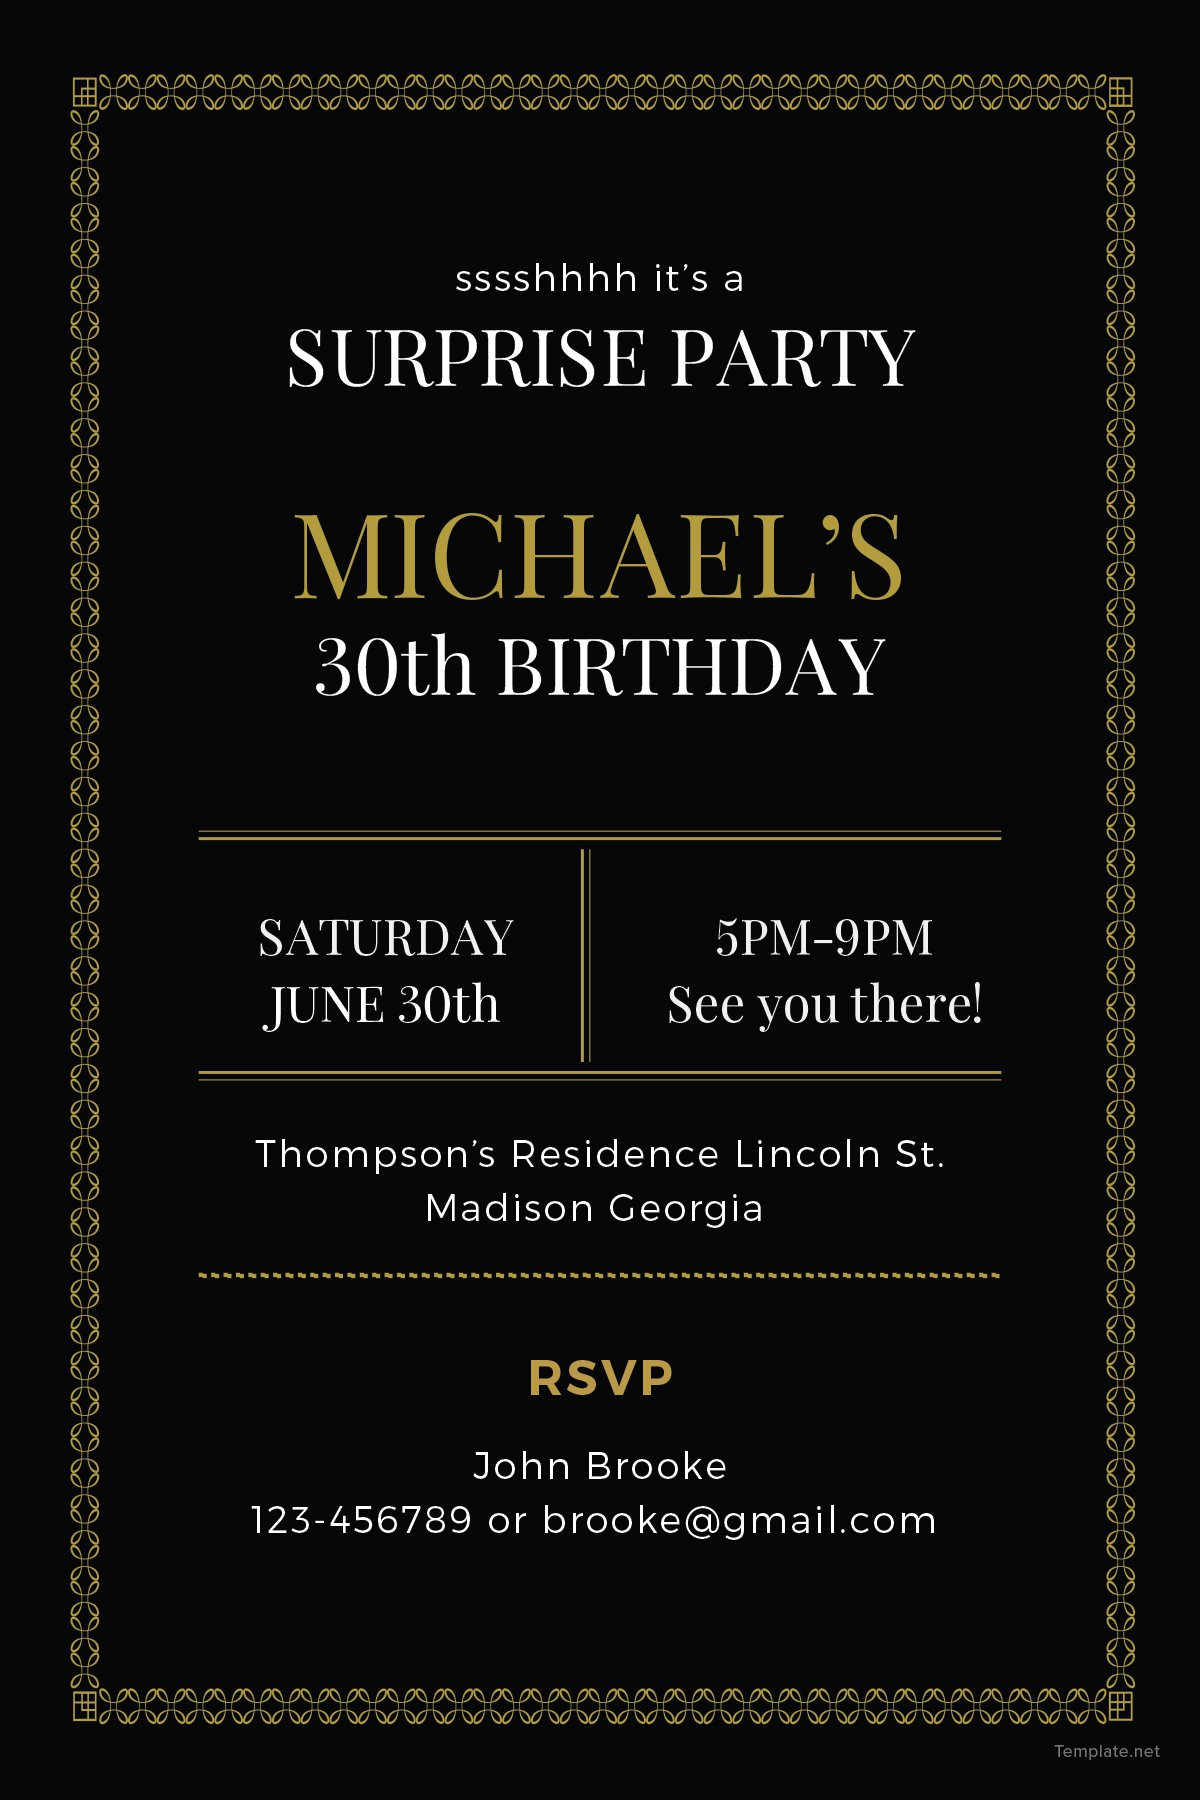 Free Surprise Party Invitation Template In Adobe Illustrator Template